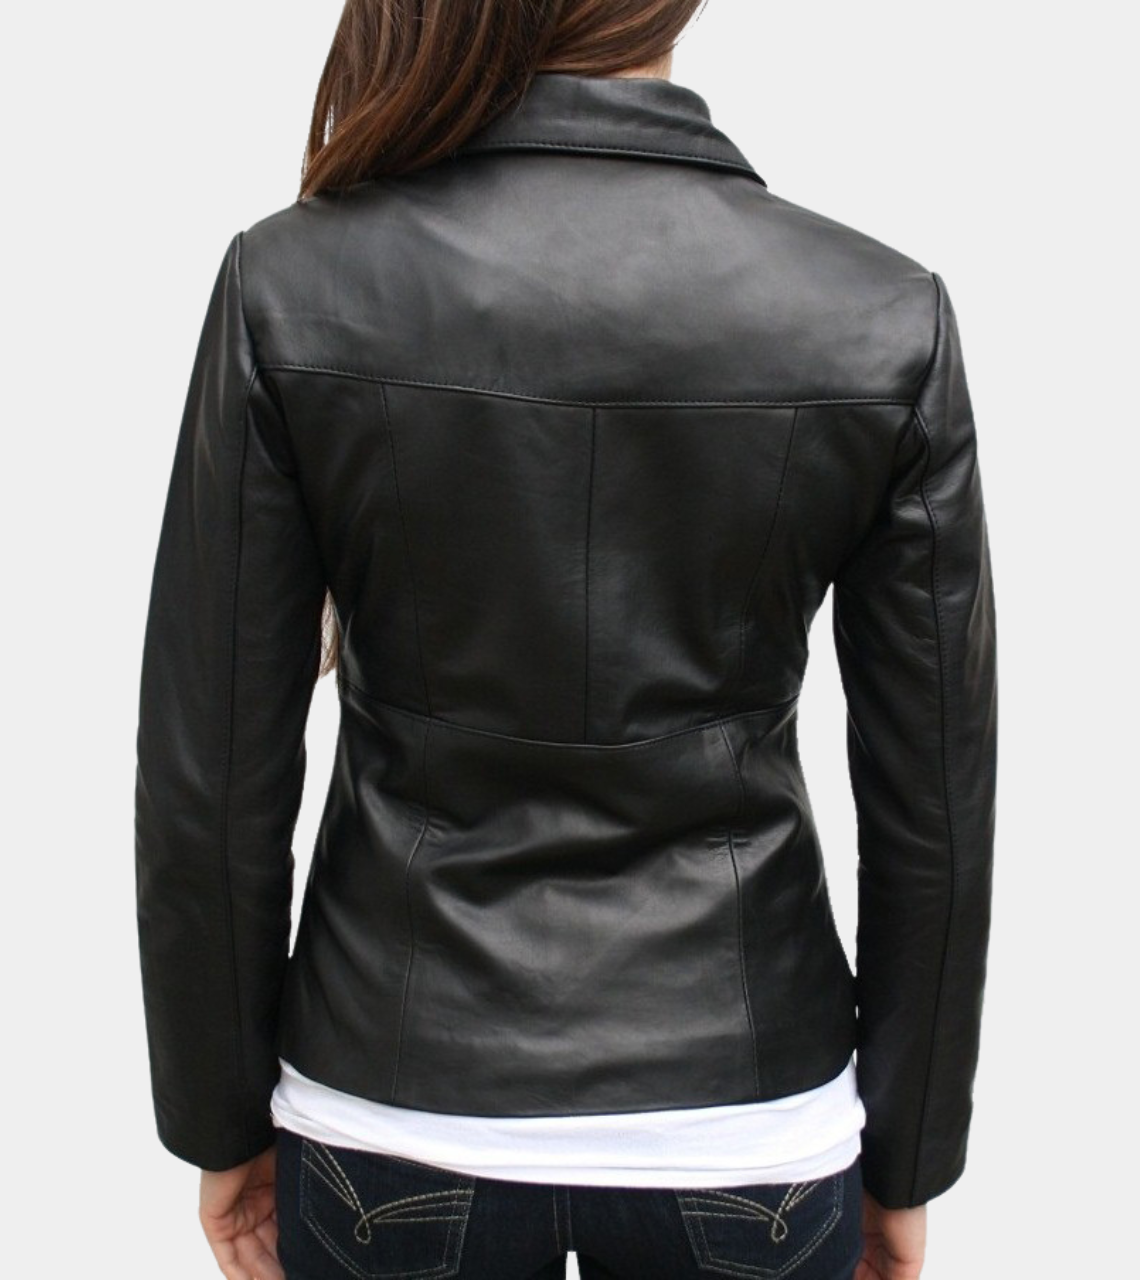 FitBust Black Women's Leather Jacket Back